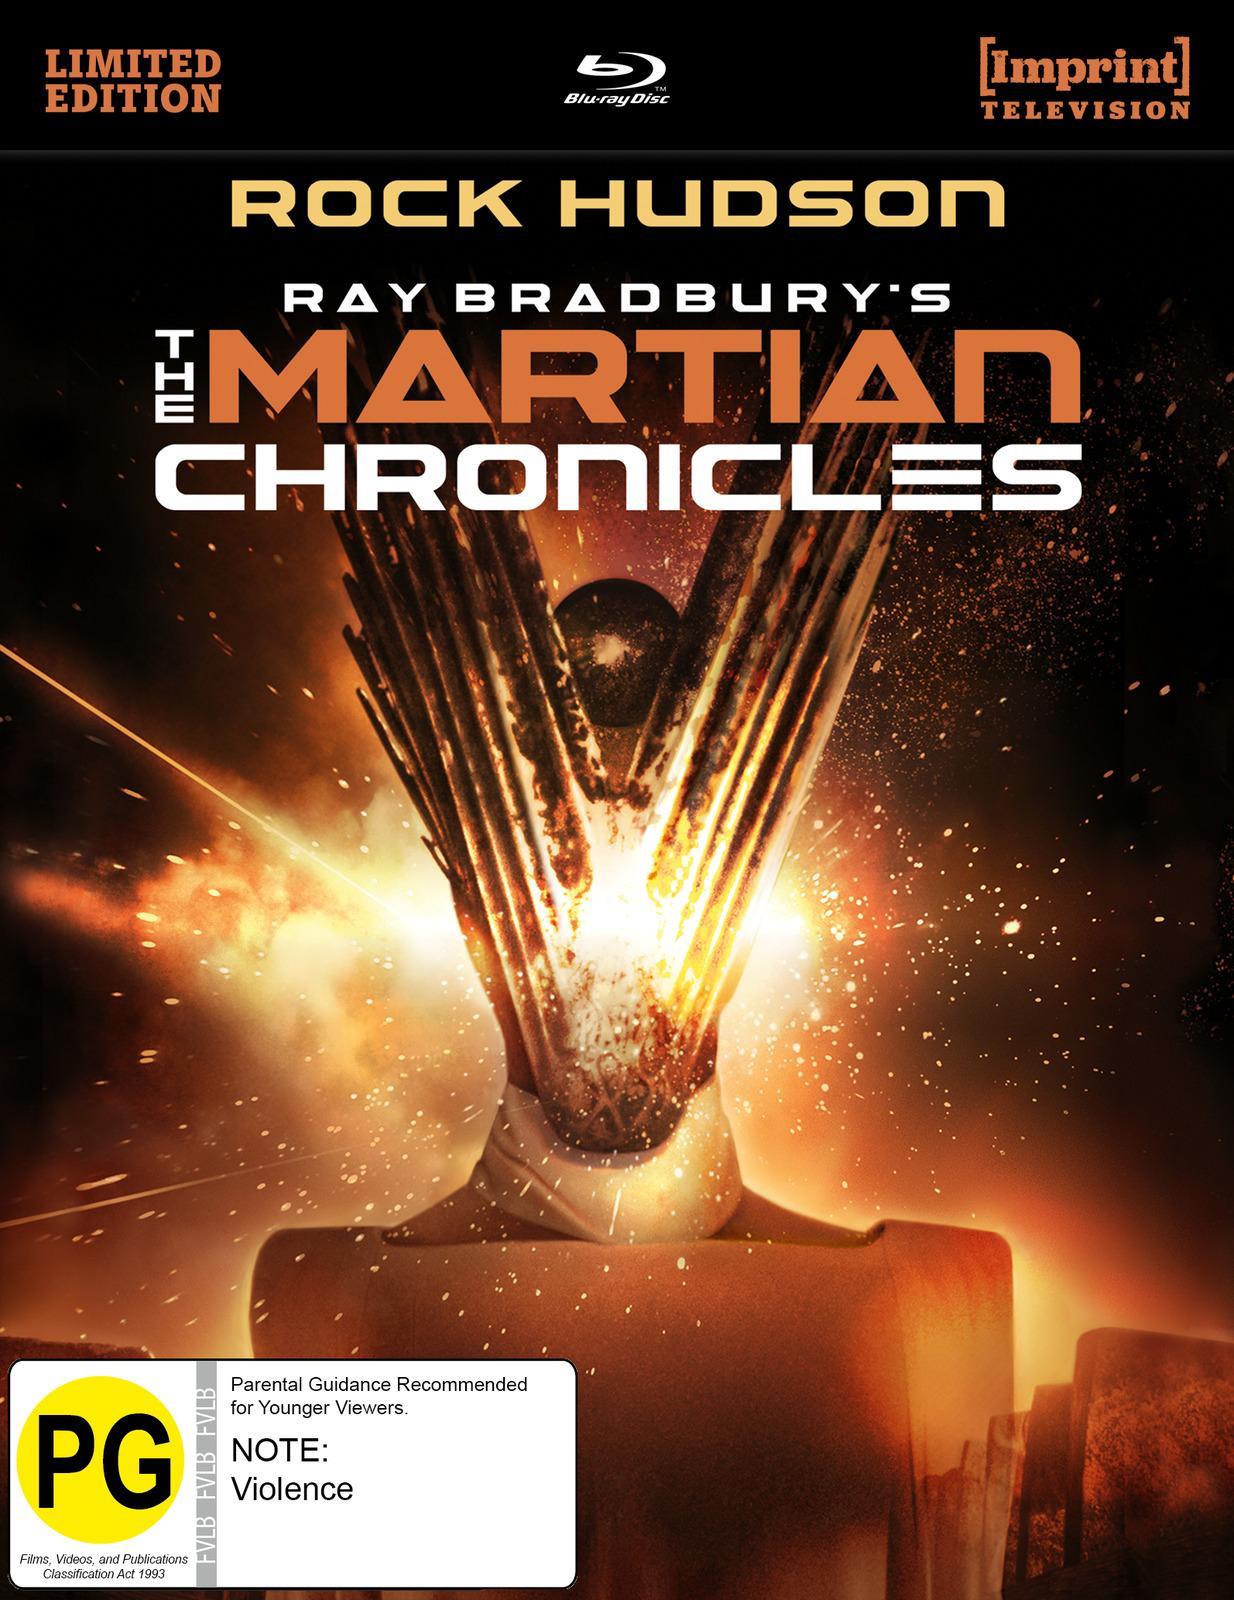 Ray Bradbury's The Martian Chronicles (Imprint Tv Collection #5)